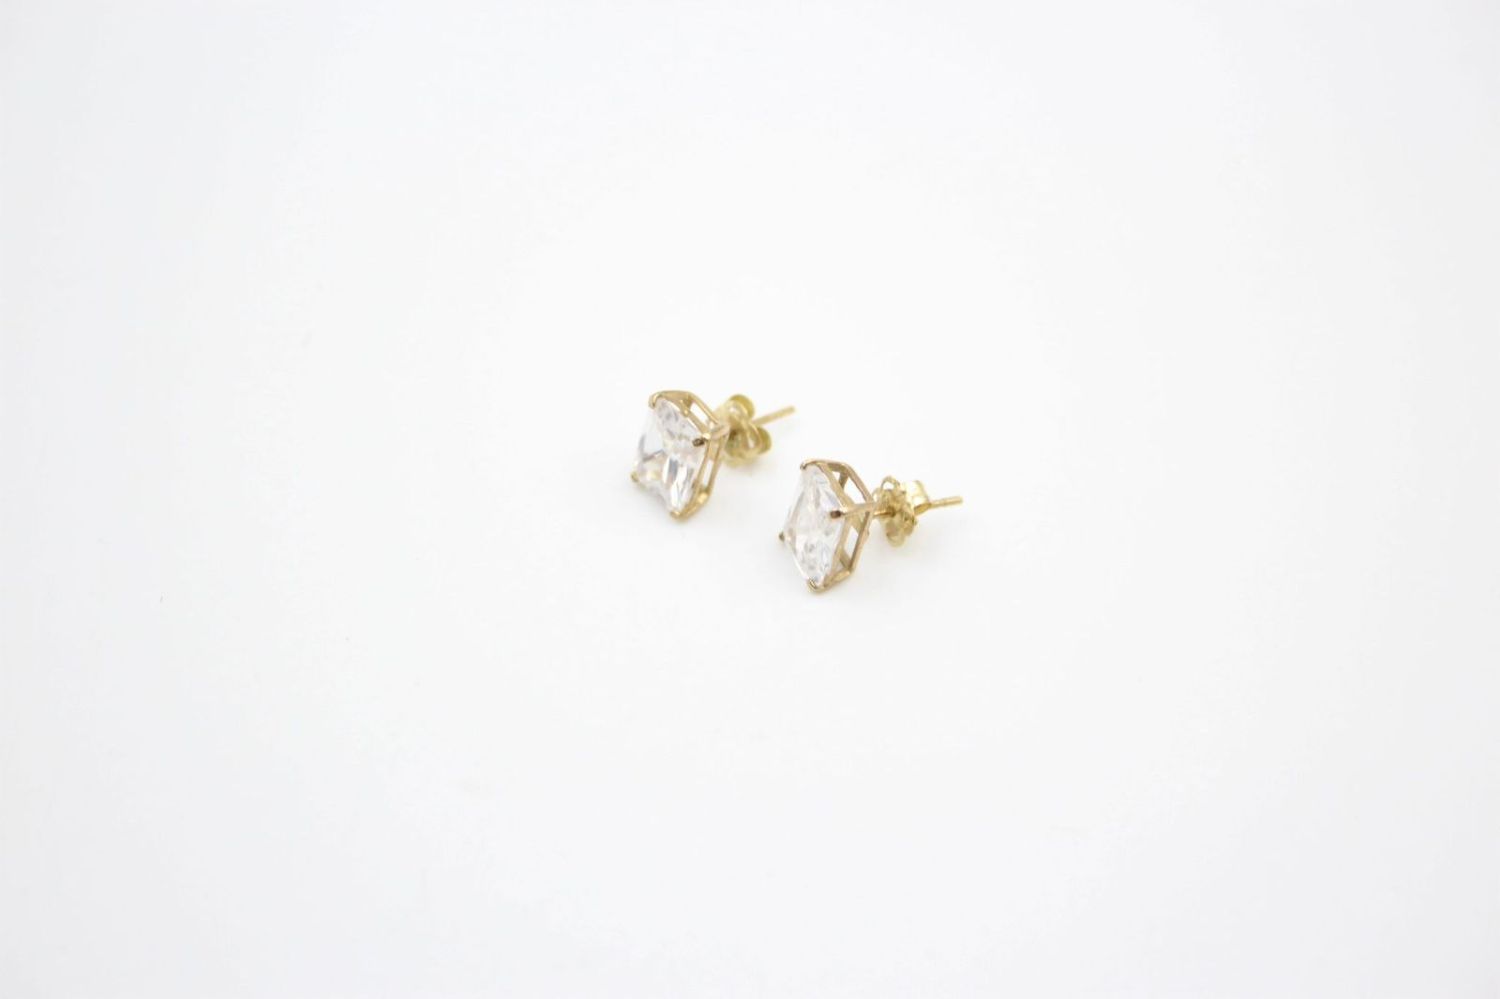 3 x 9ct gold gemstone stud earrings 2.9 grams gross - Image 3 of 11